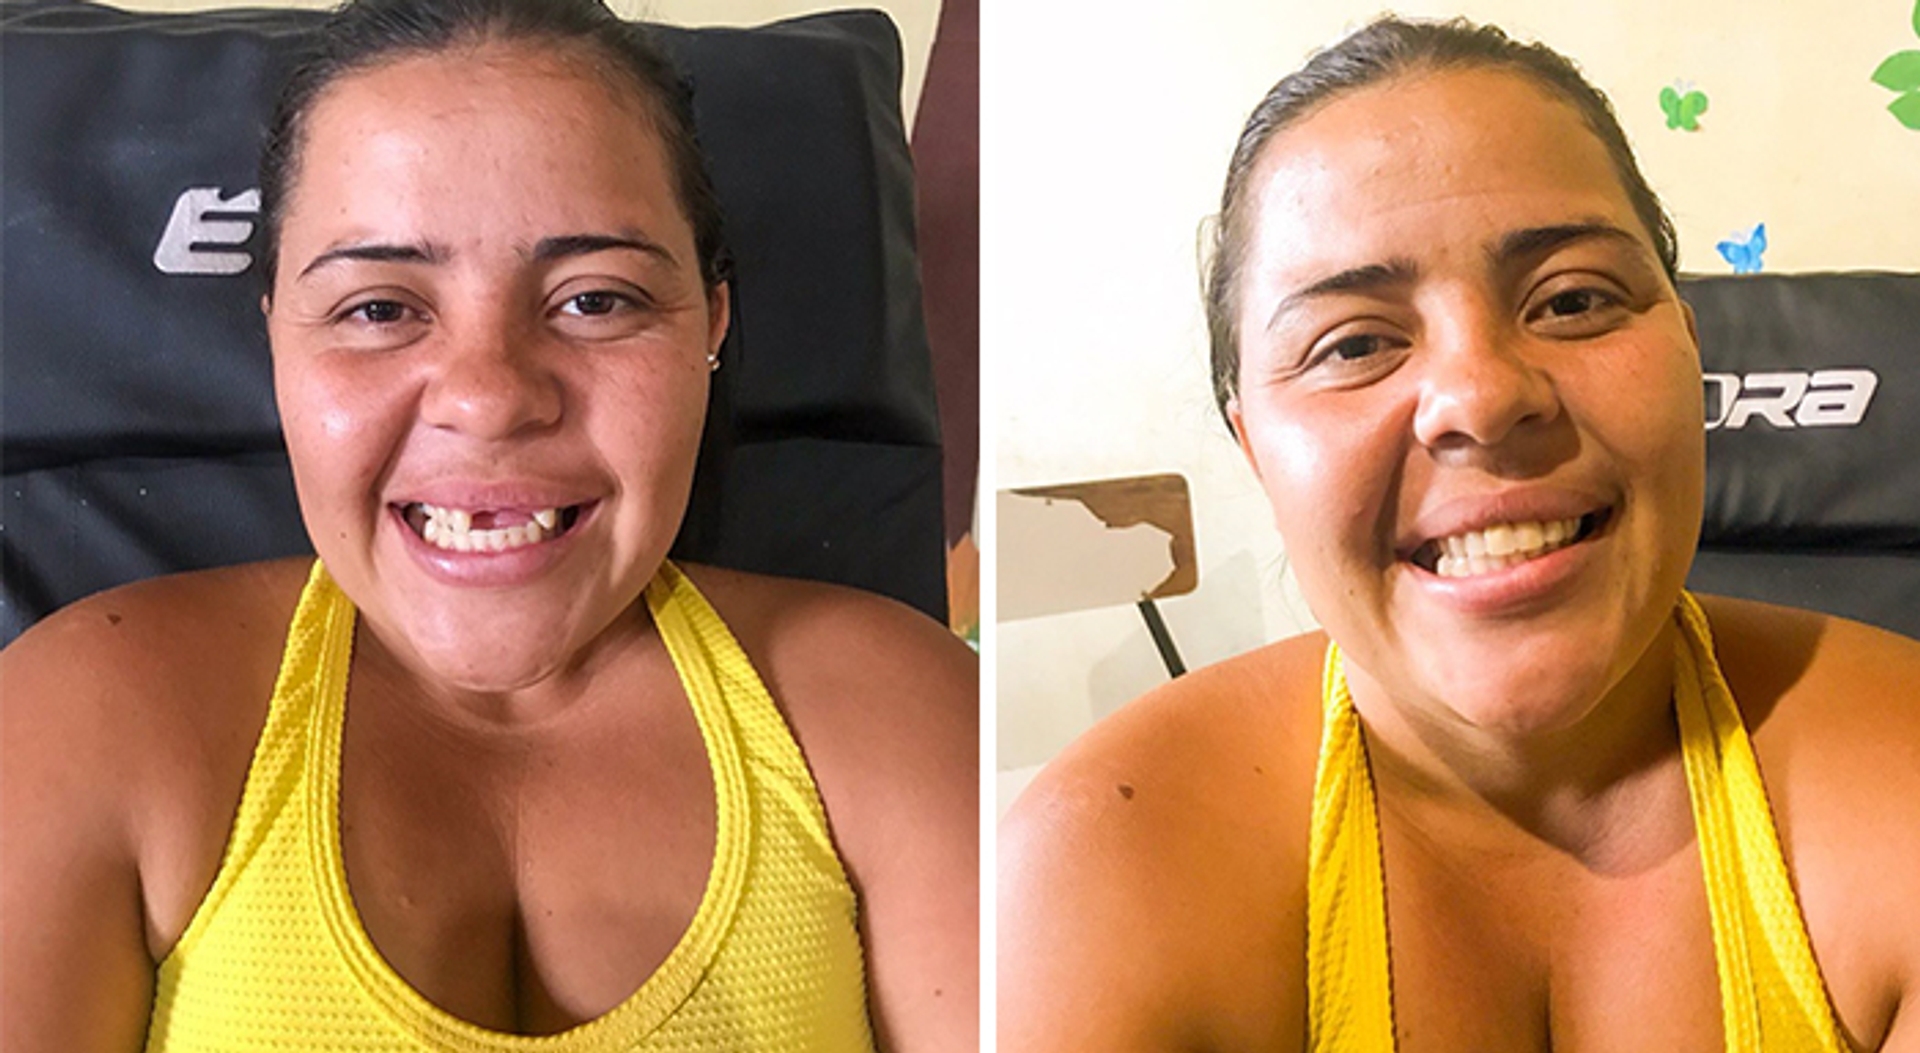 brazilian-dentist-travel-poor-people-teeth-fix-felipe-rossi-30-5db941ba7cb0a__700